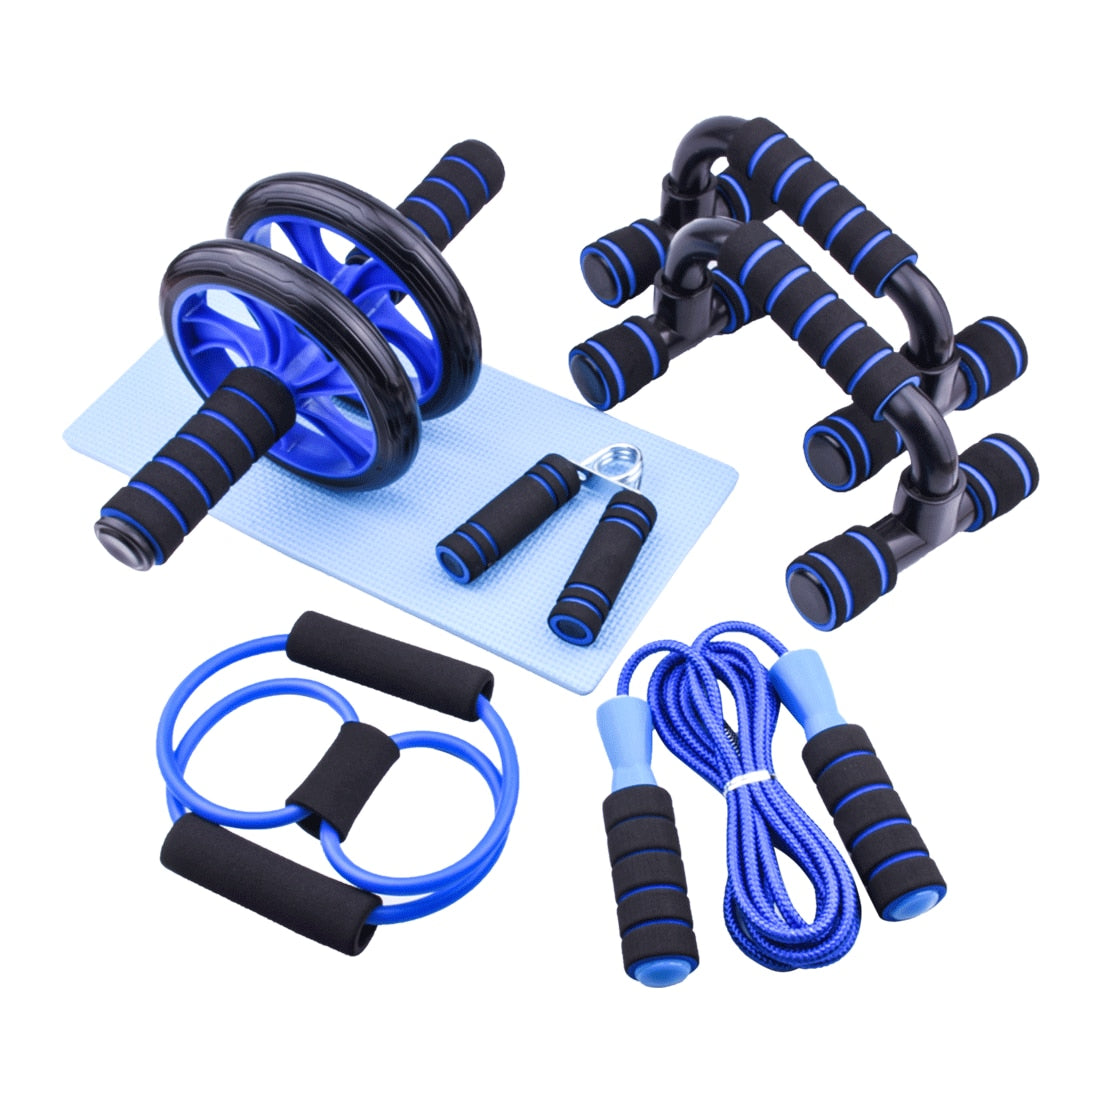 Home Workout Equipment, Home Gym Set